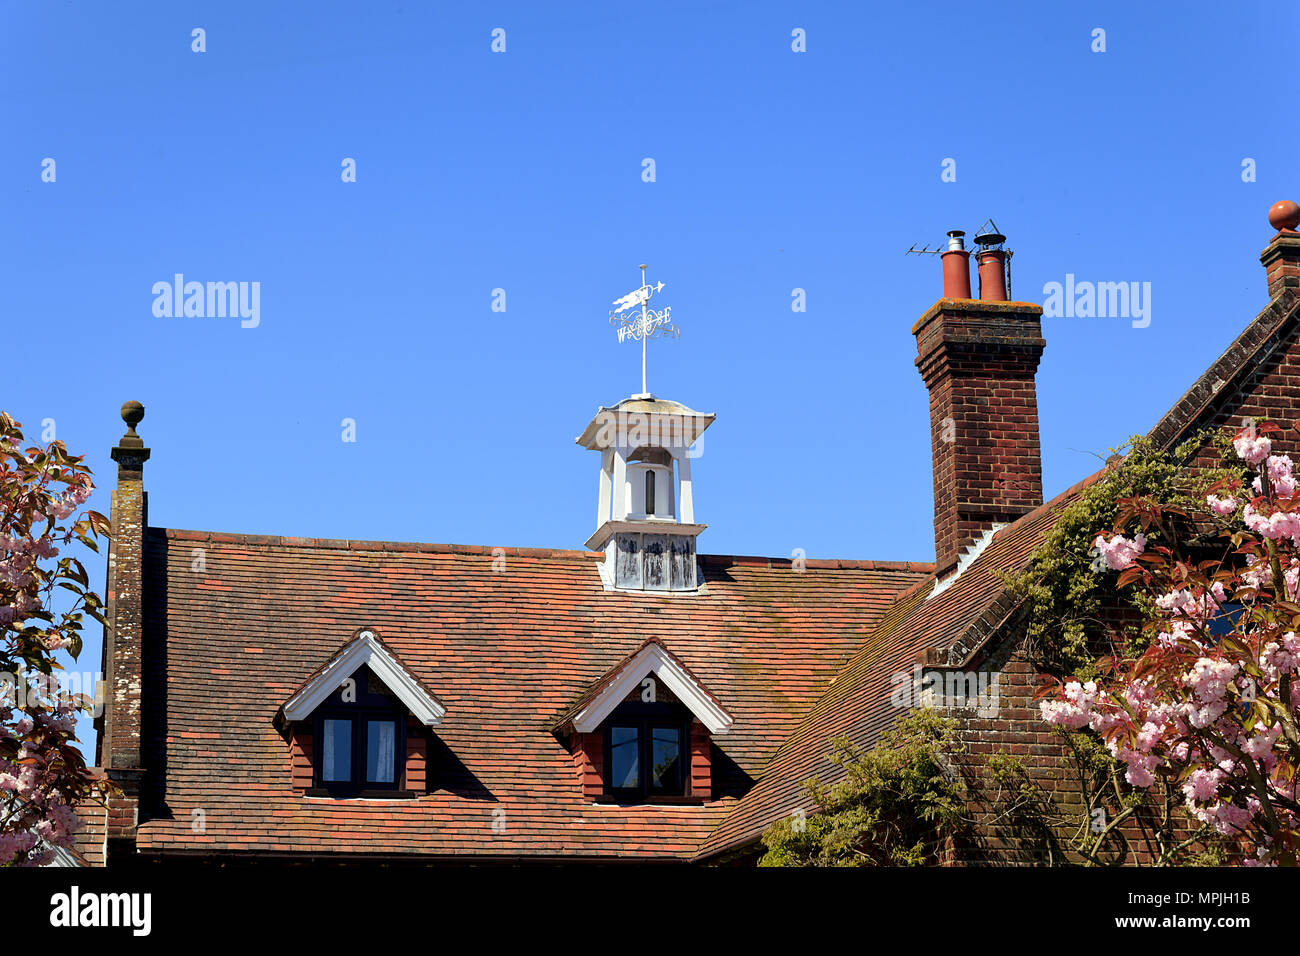 The Old School Roof in Knapton village, Norfolk, England, UK Stock Photo